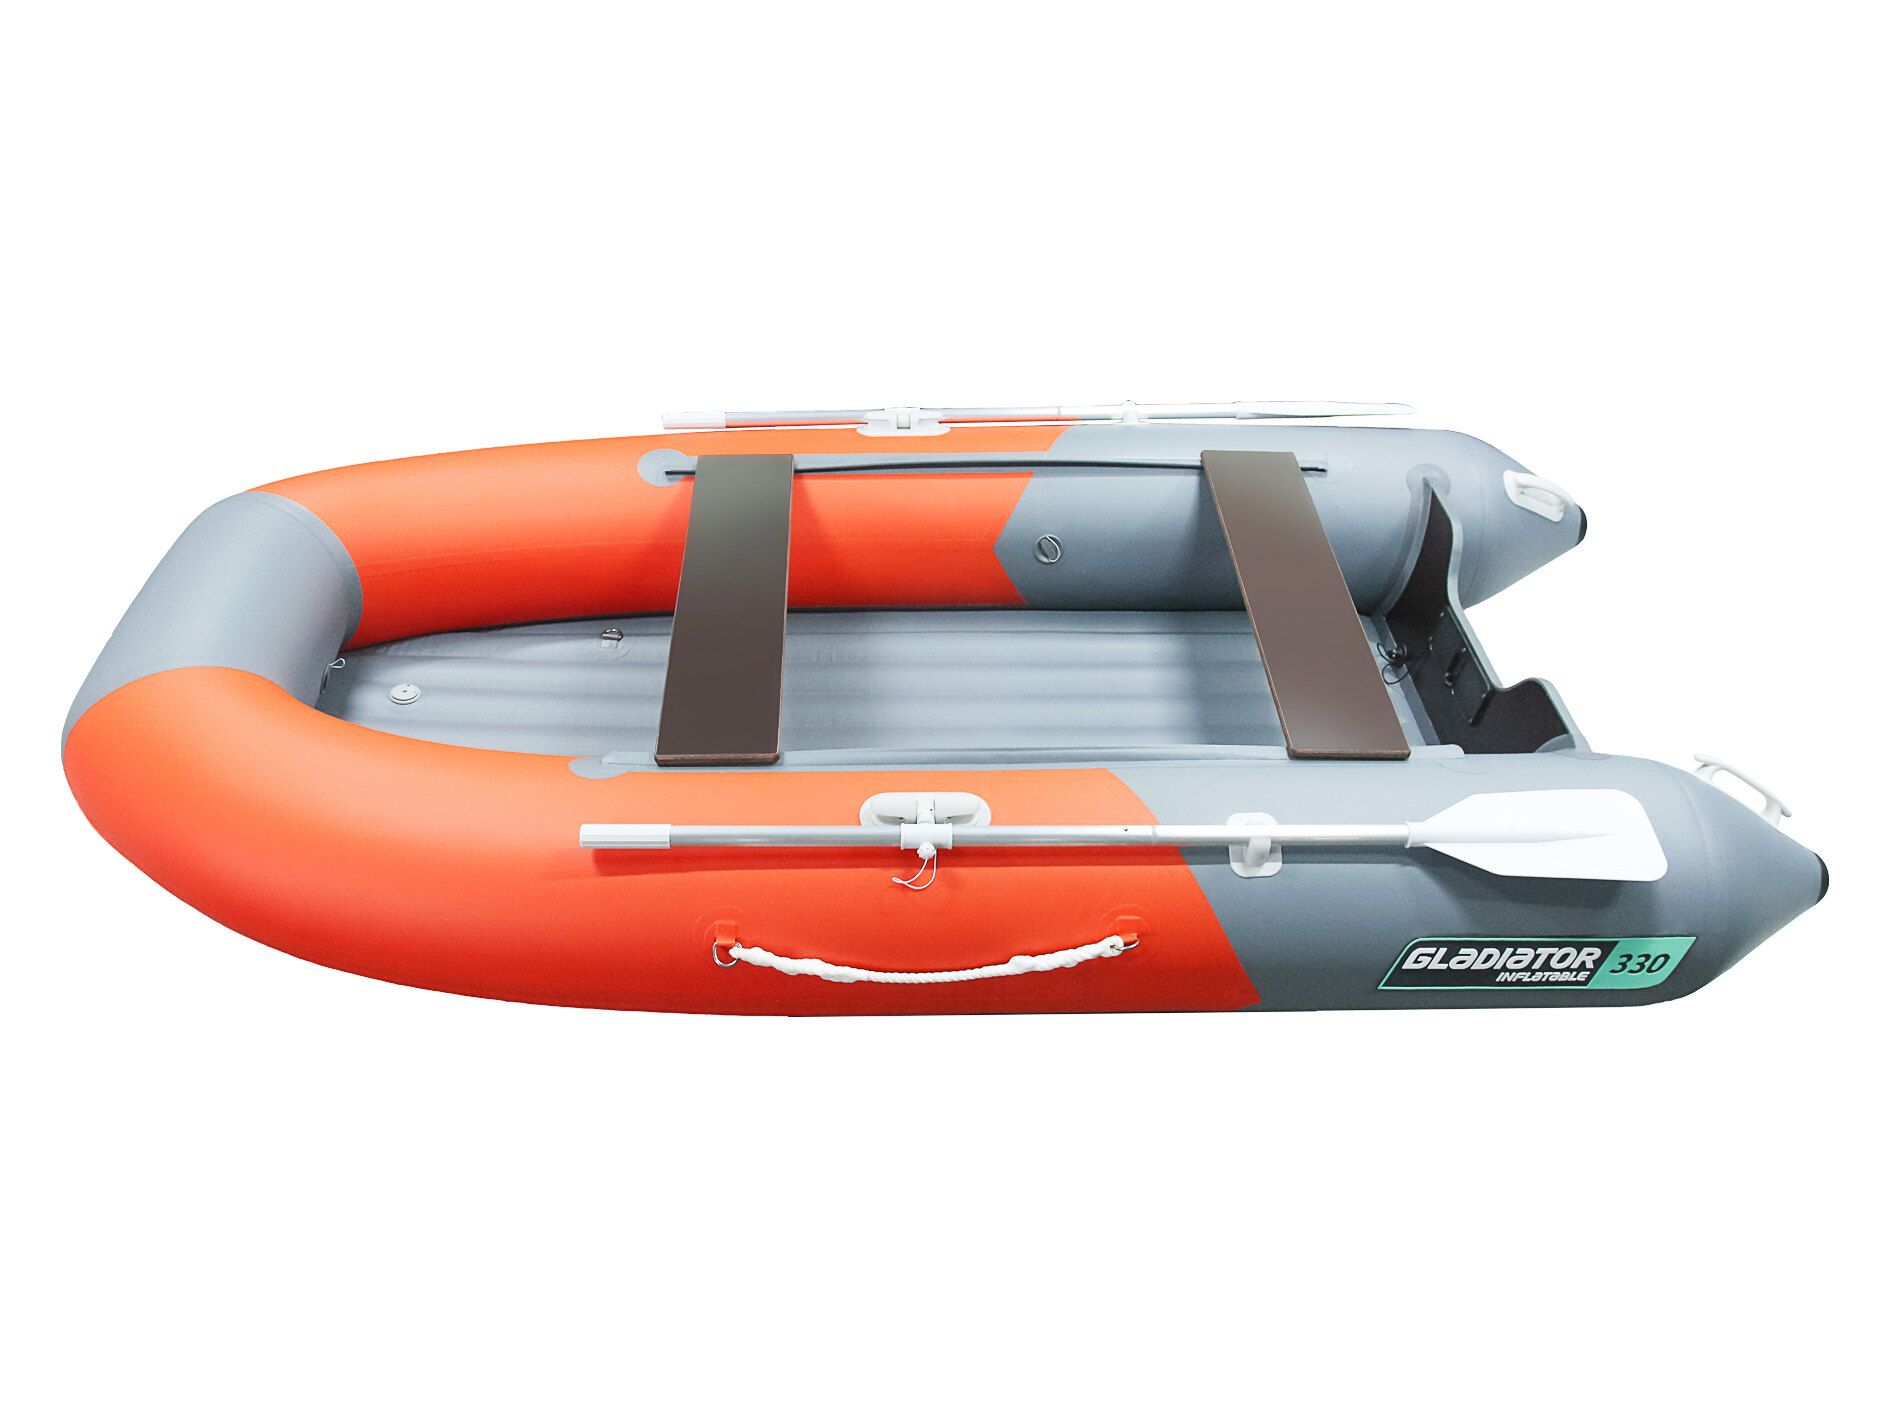 Надувная лодка Gladiator E 300SL. Техническая характеристика лодки надувноймоторной из ПВХ Gladiator E 300SL. Продажа надувных лодок Гладиатор.